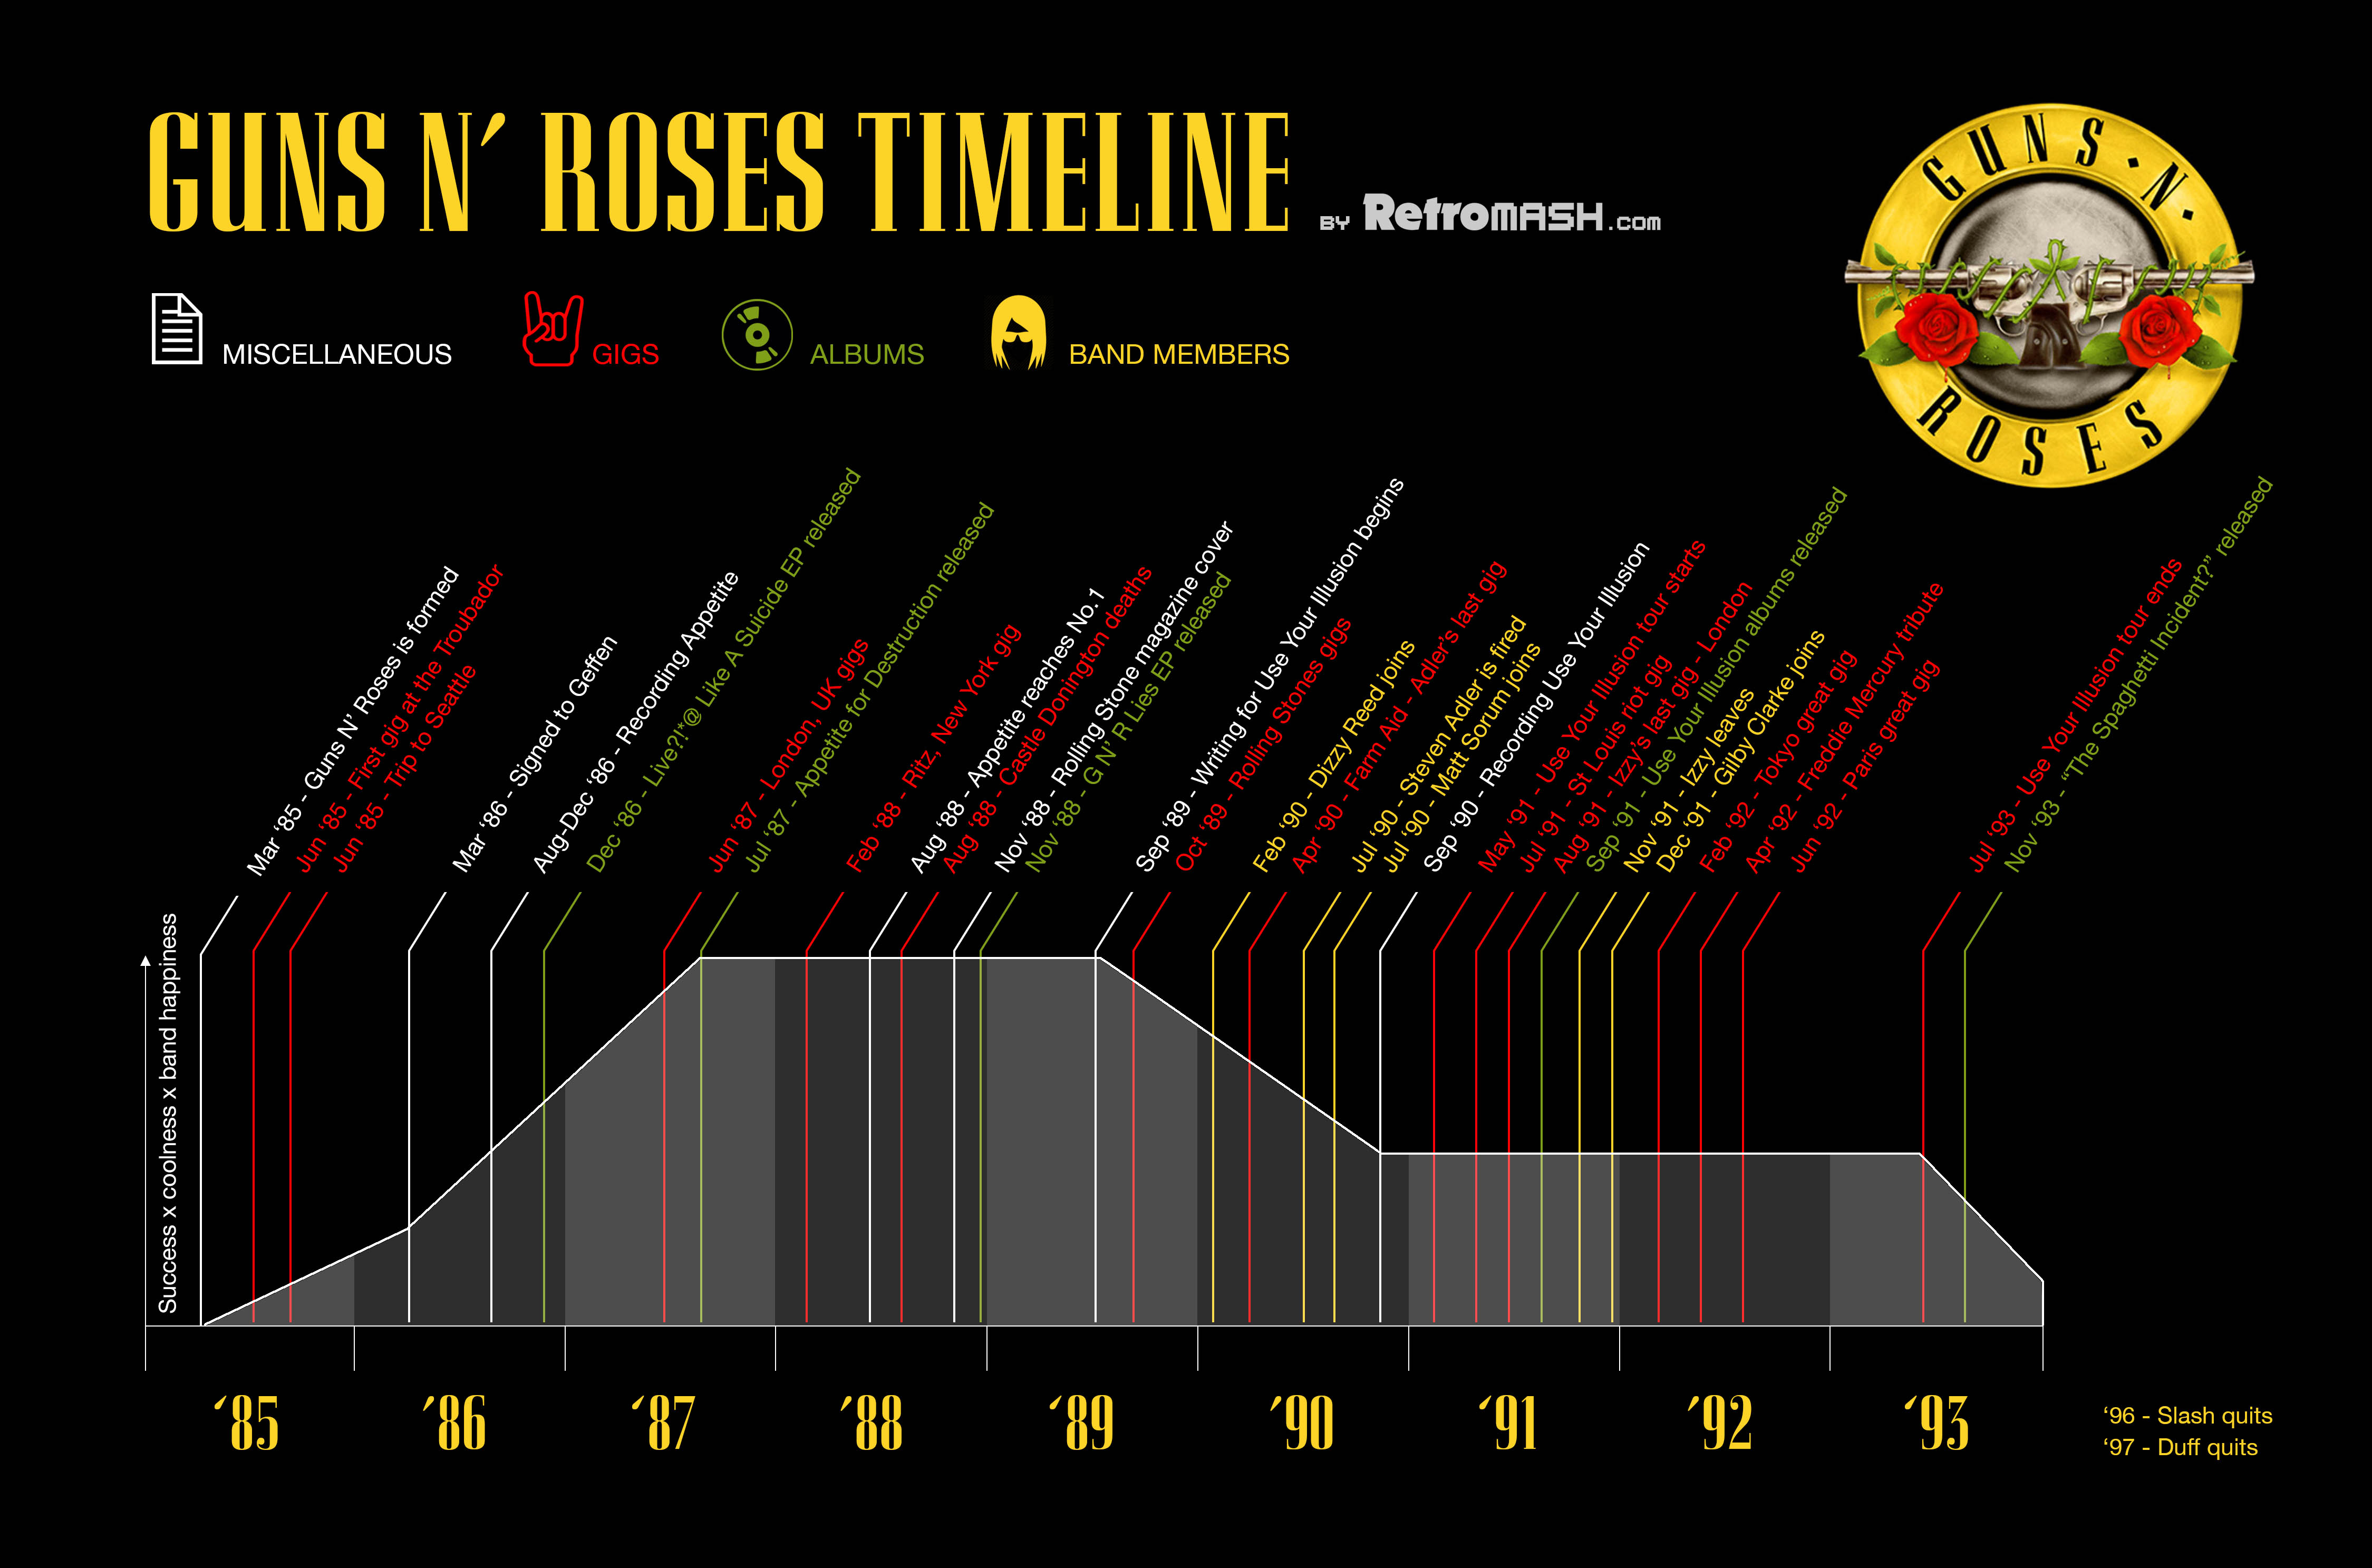 Guns N' Roses timeline